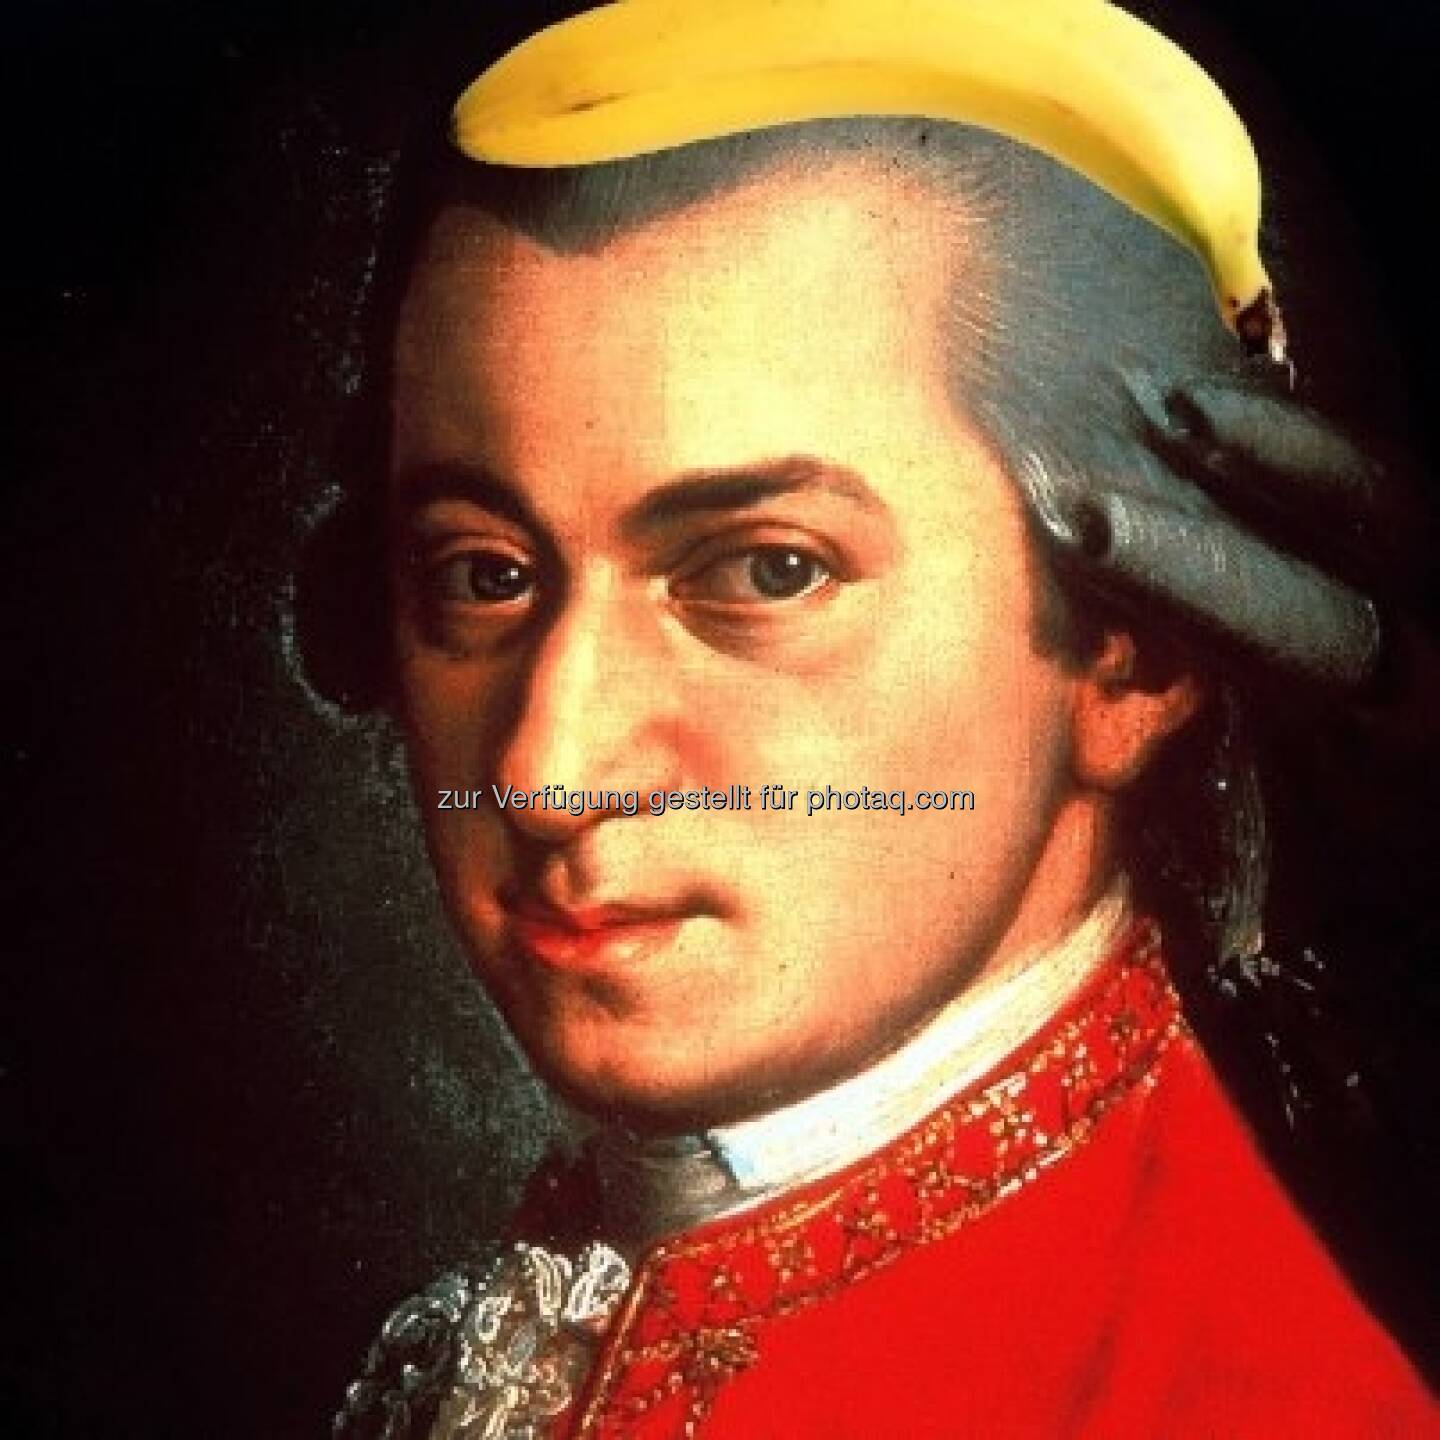 Wolfgang Banadeus Mozart https://www.facebook.com/bananingofficial